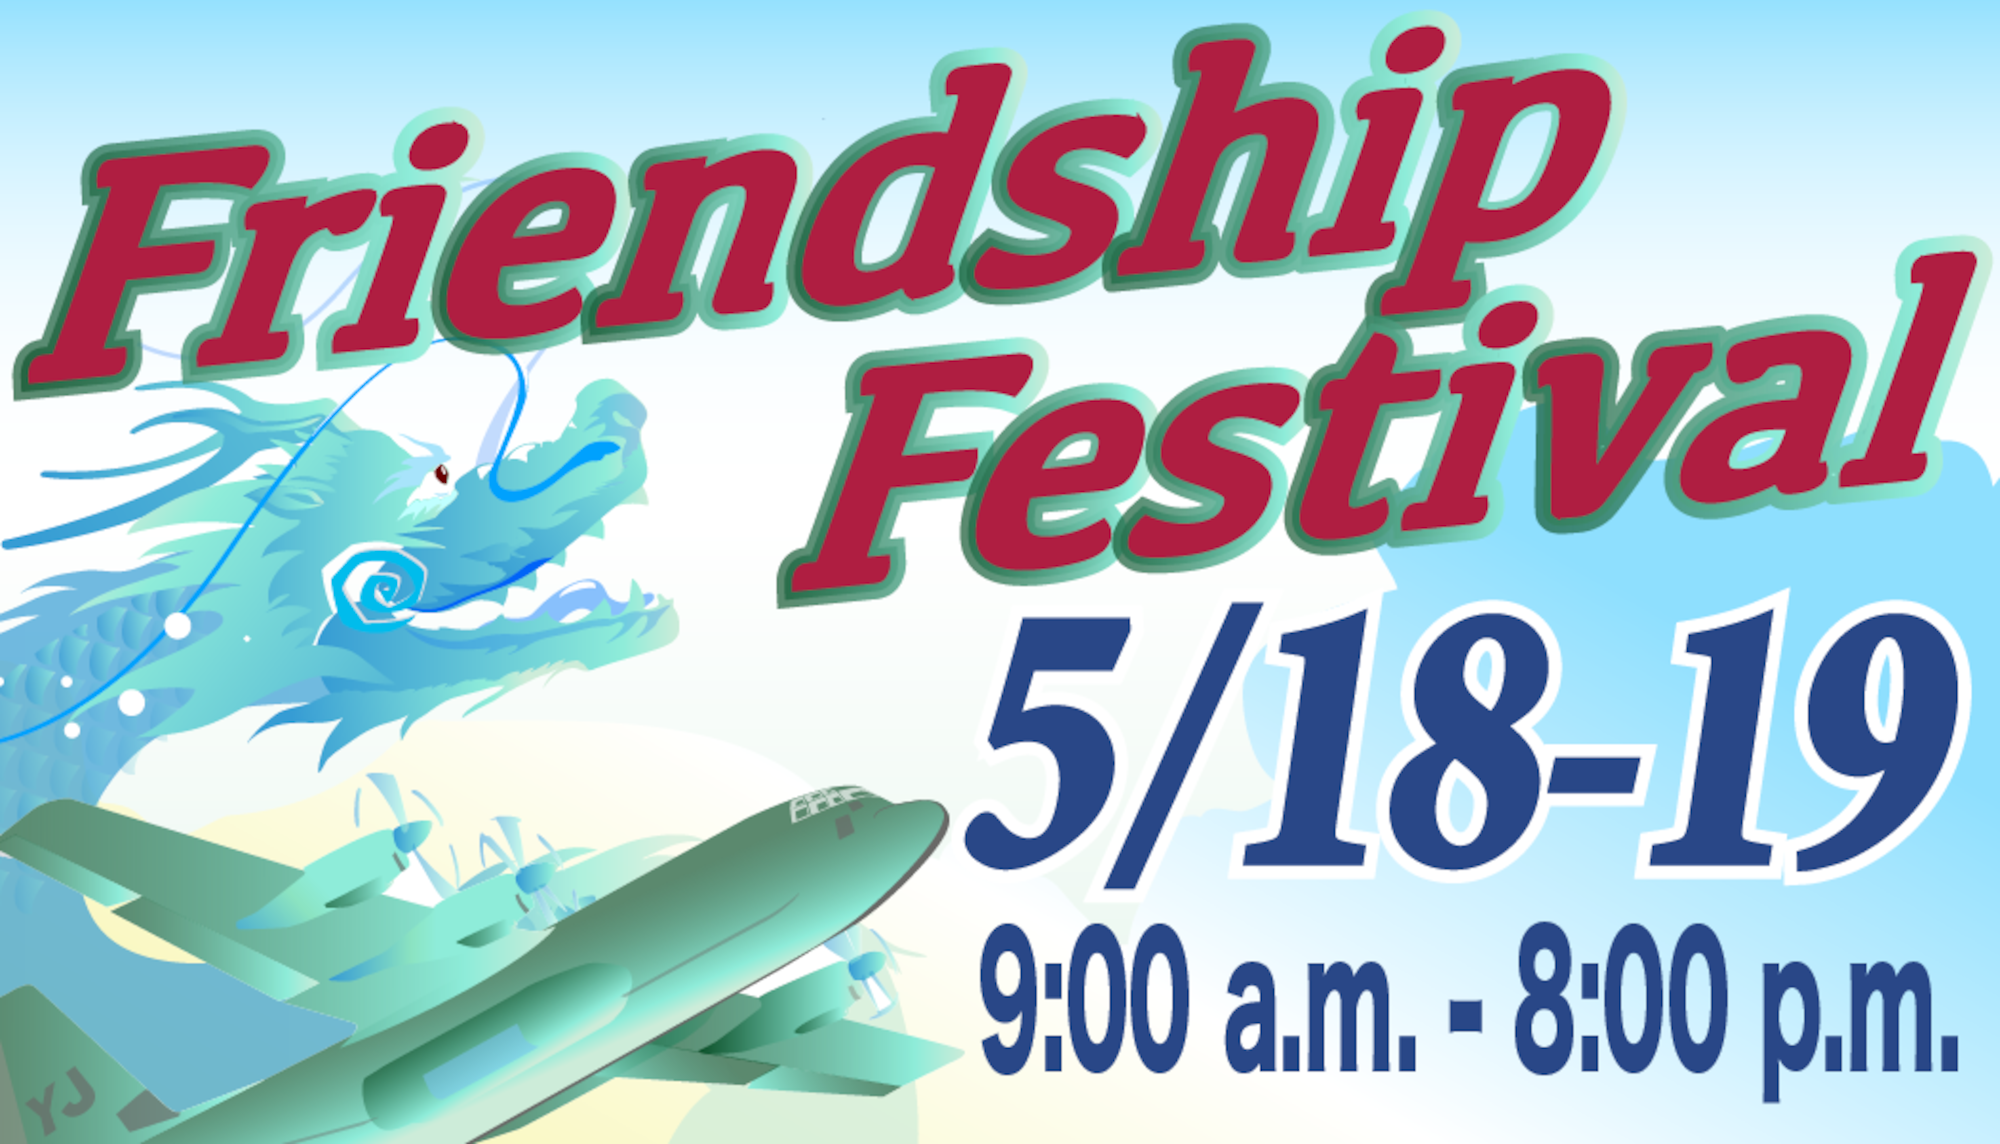 A graphic advertising Yokota Air Base's upcoming Friendship Festival.